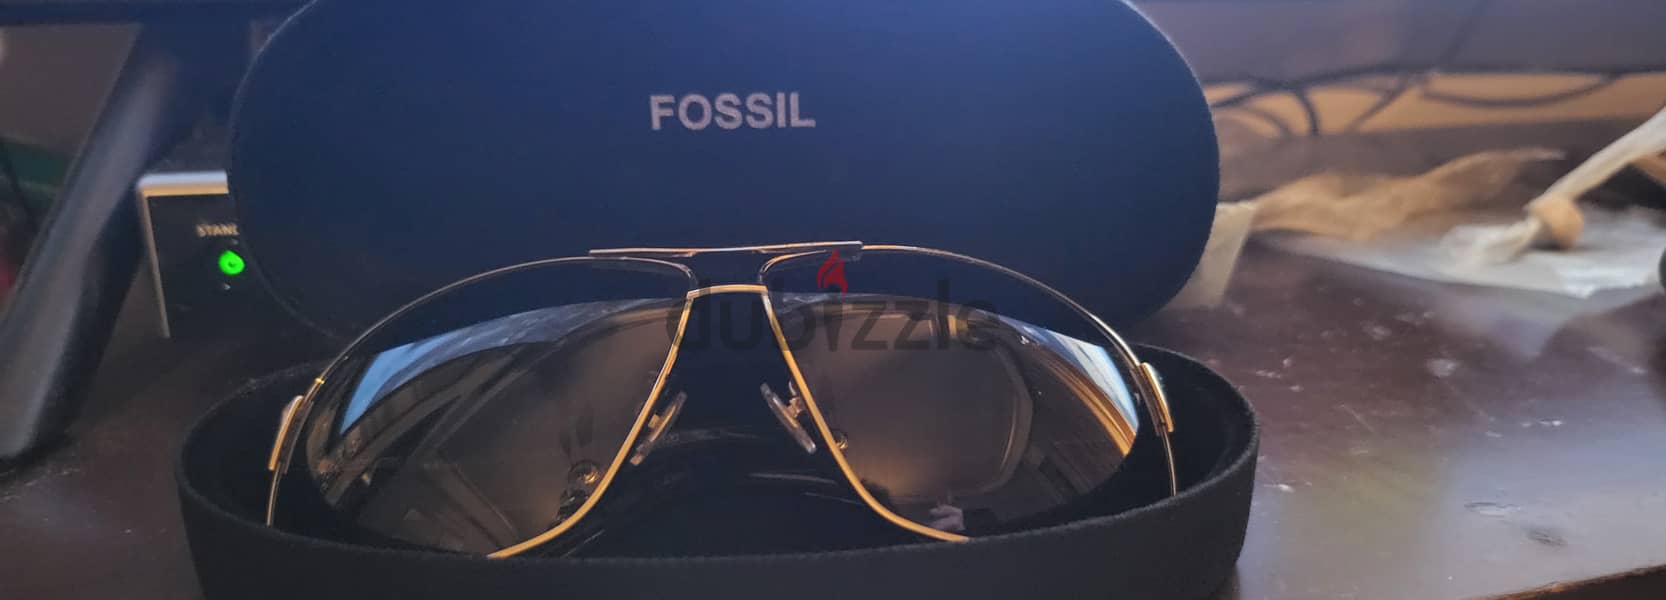 Fossil sunglasses new and original 3